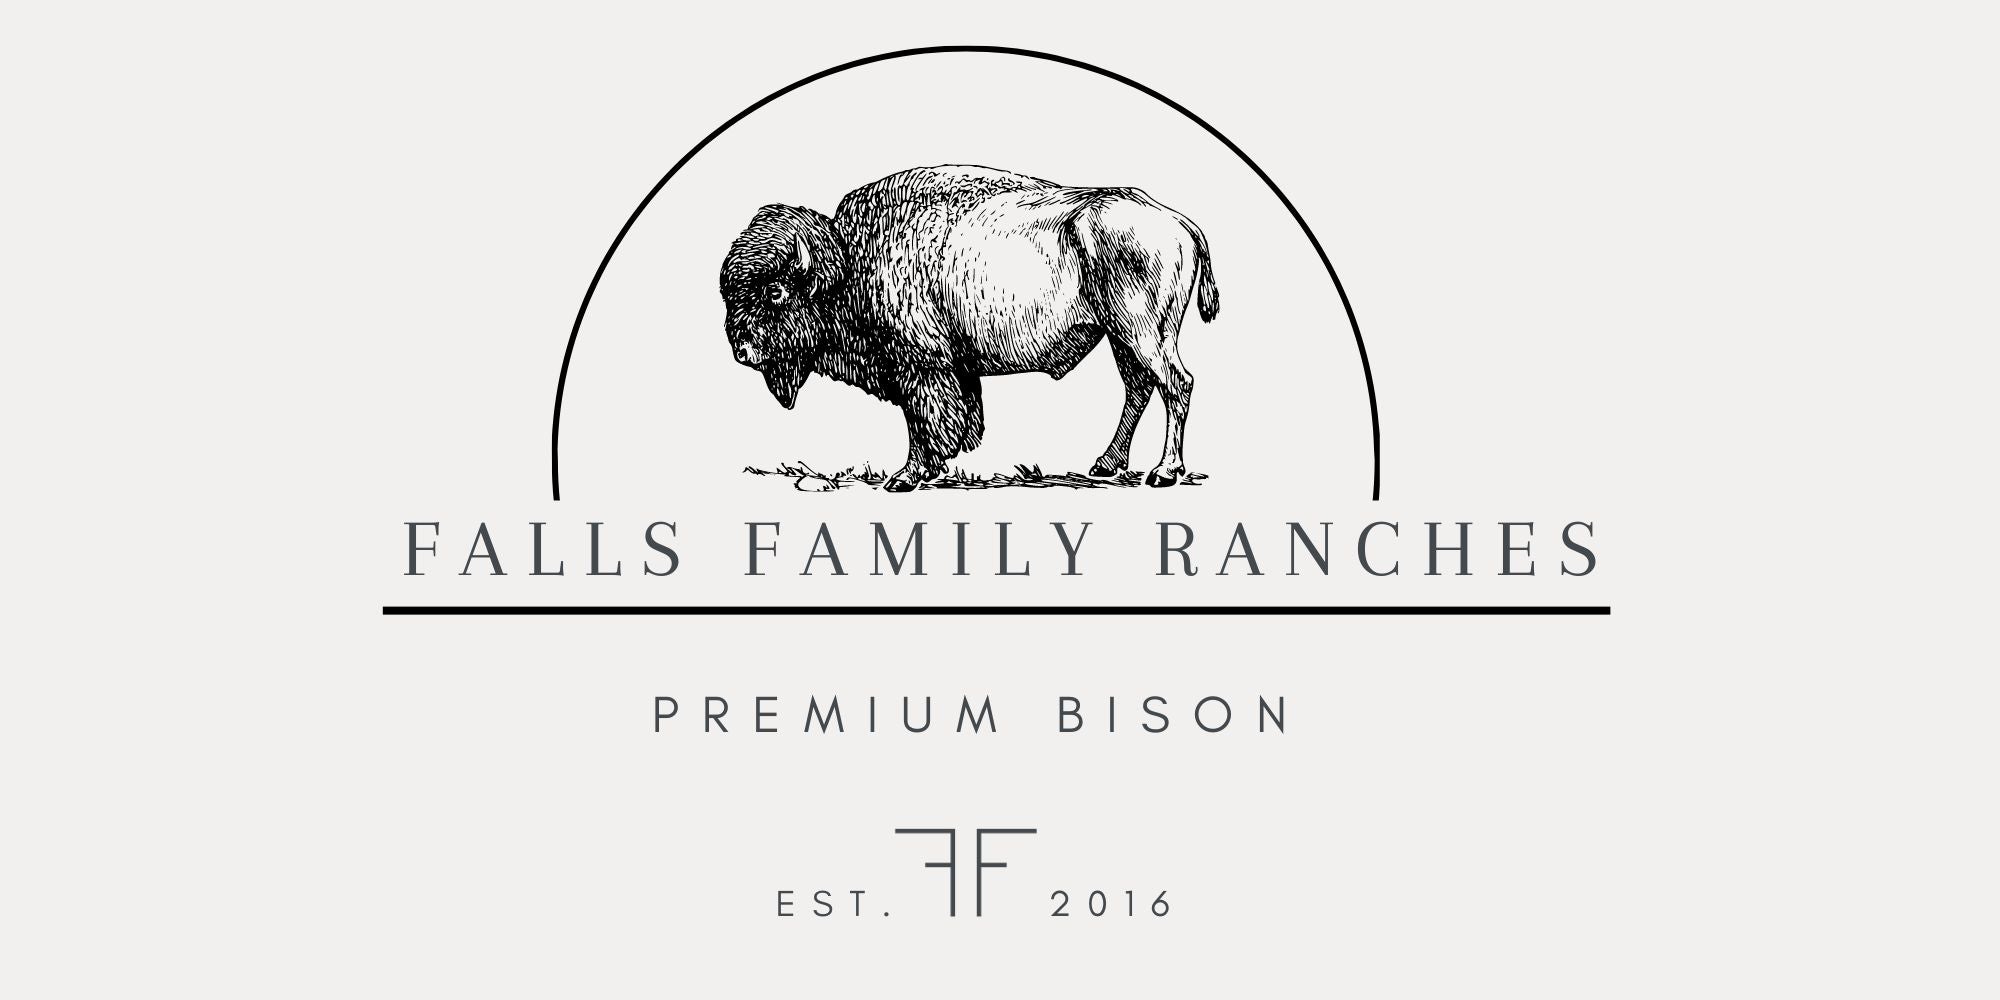 Falls Family Ranches